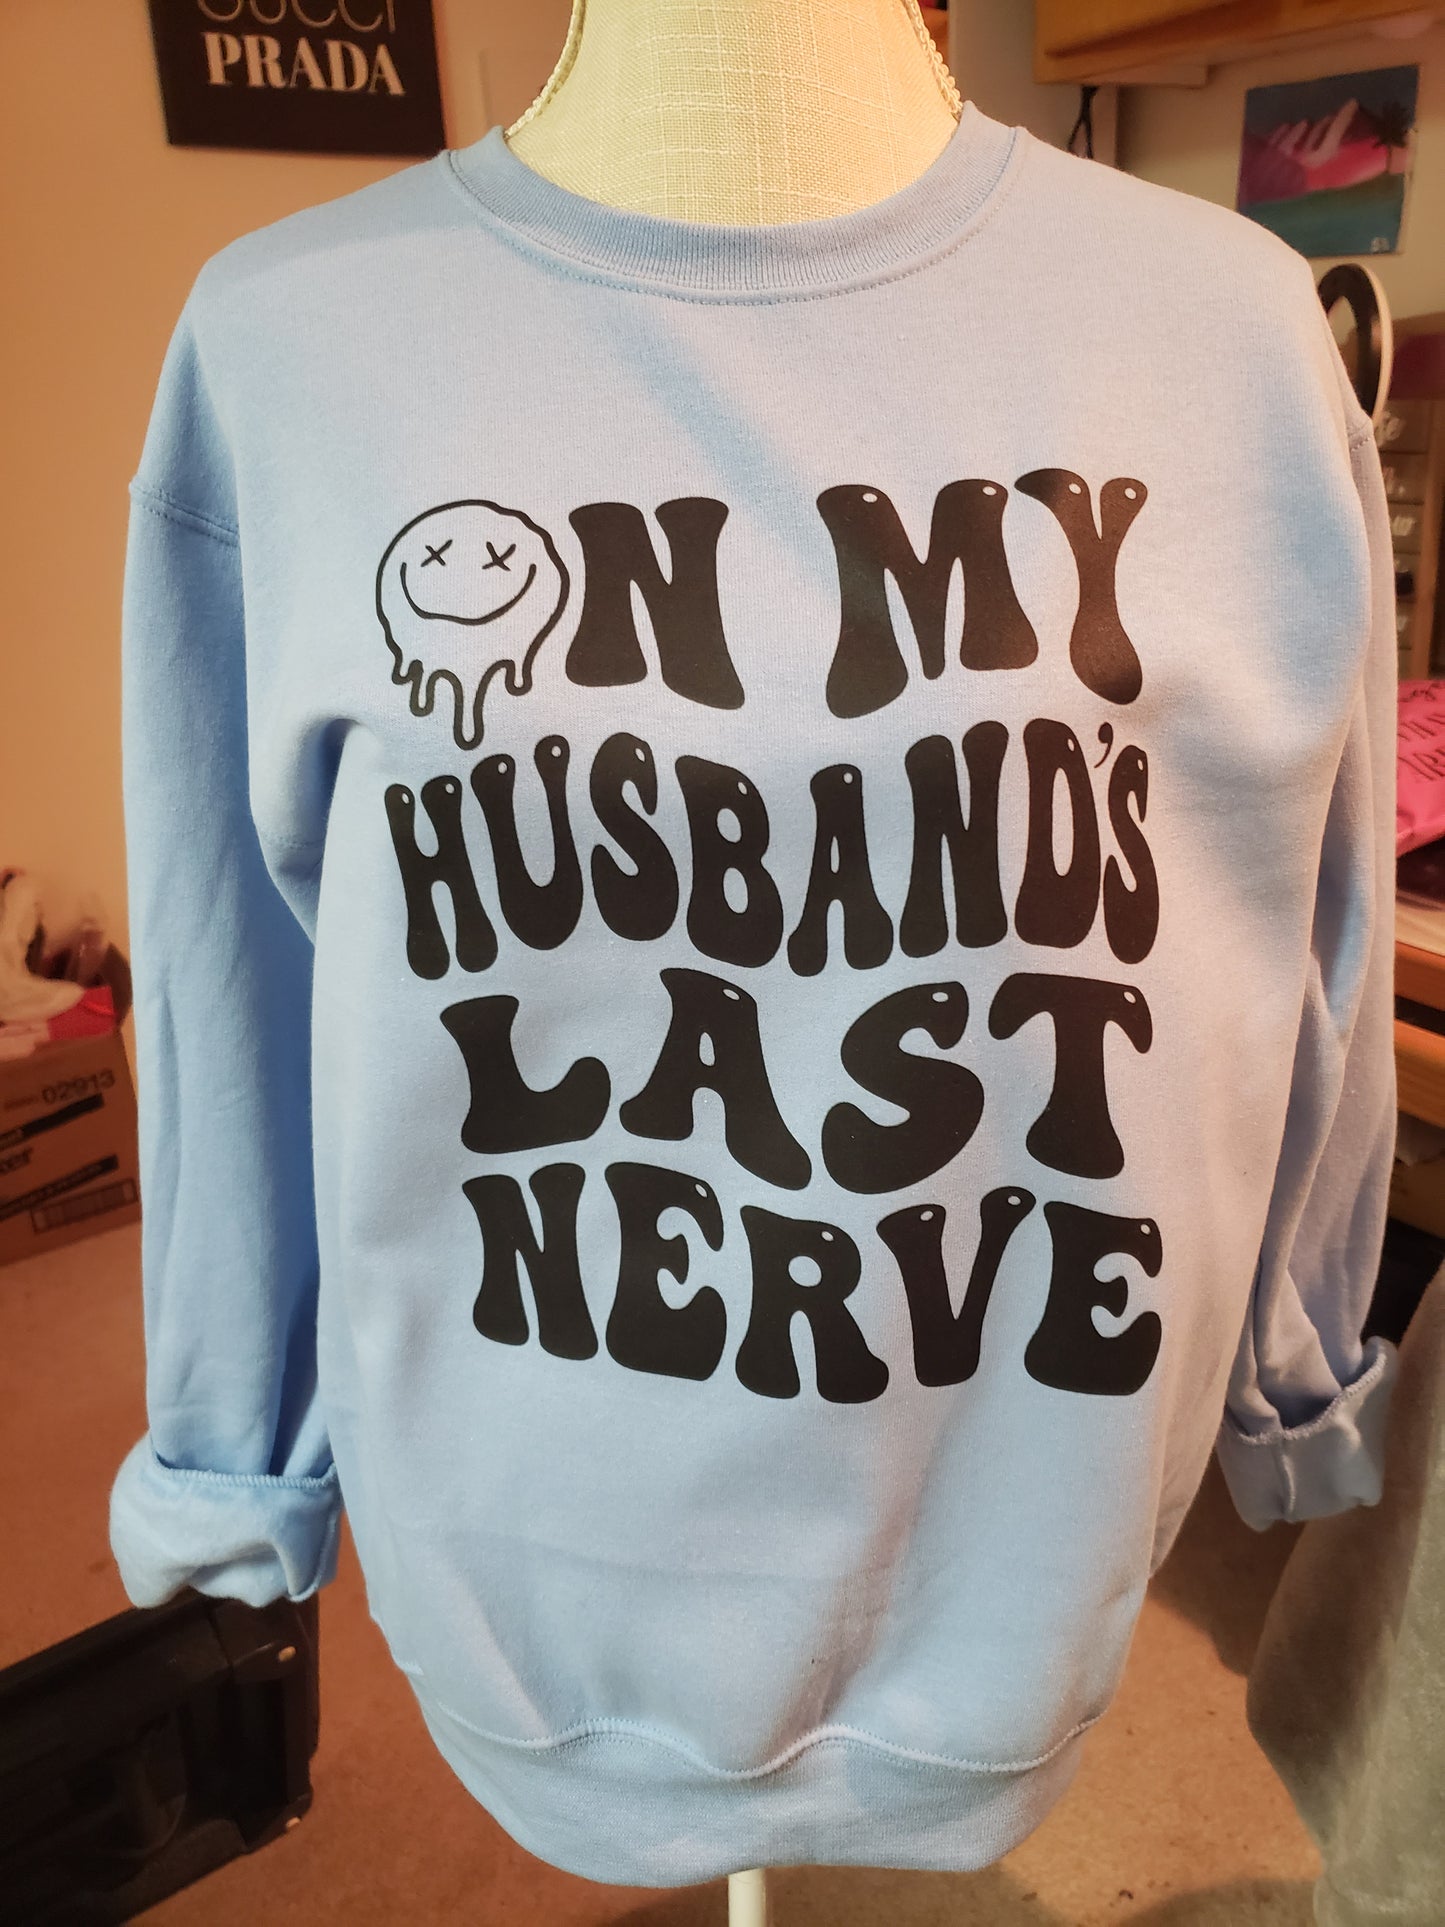 On my husbands last nerve-Sweatshirt